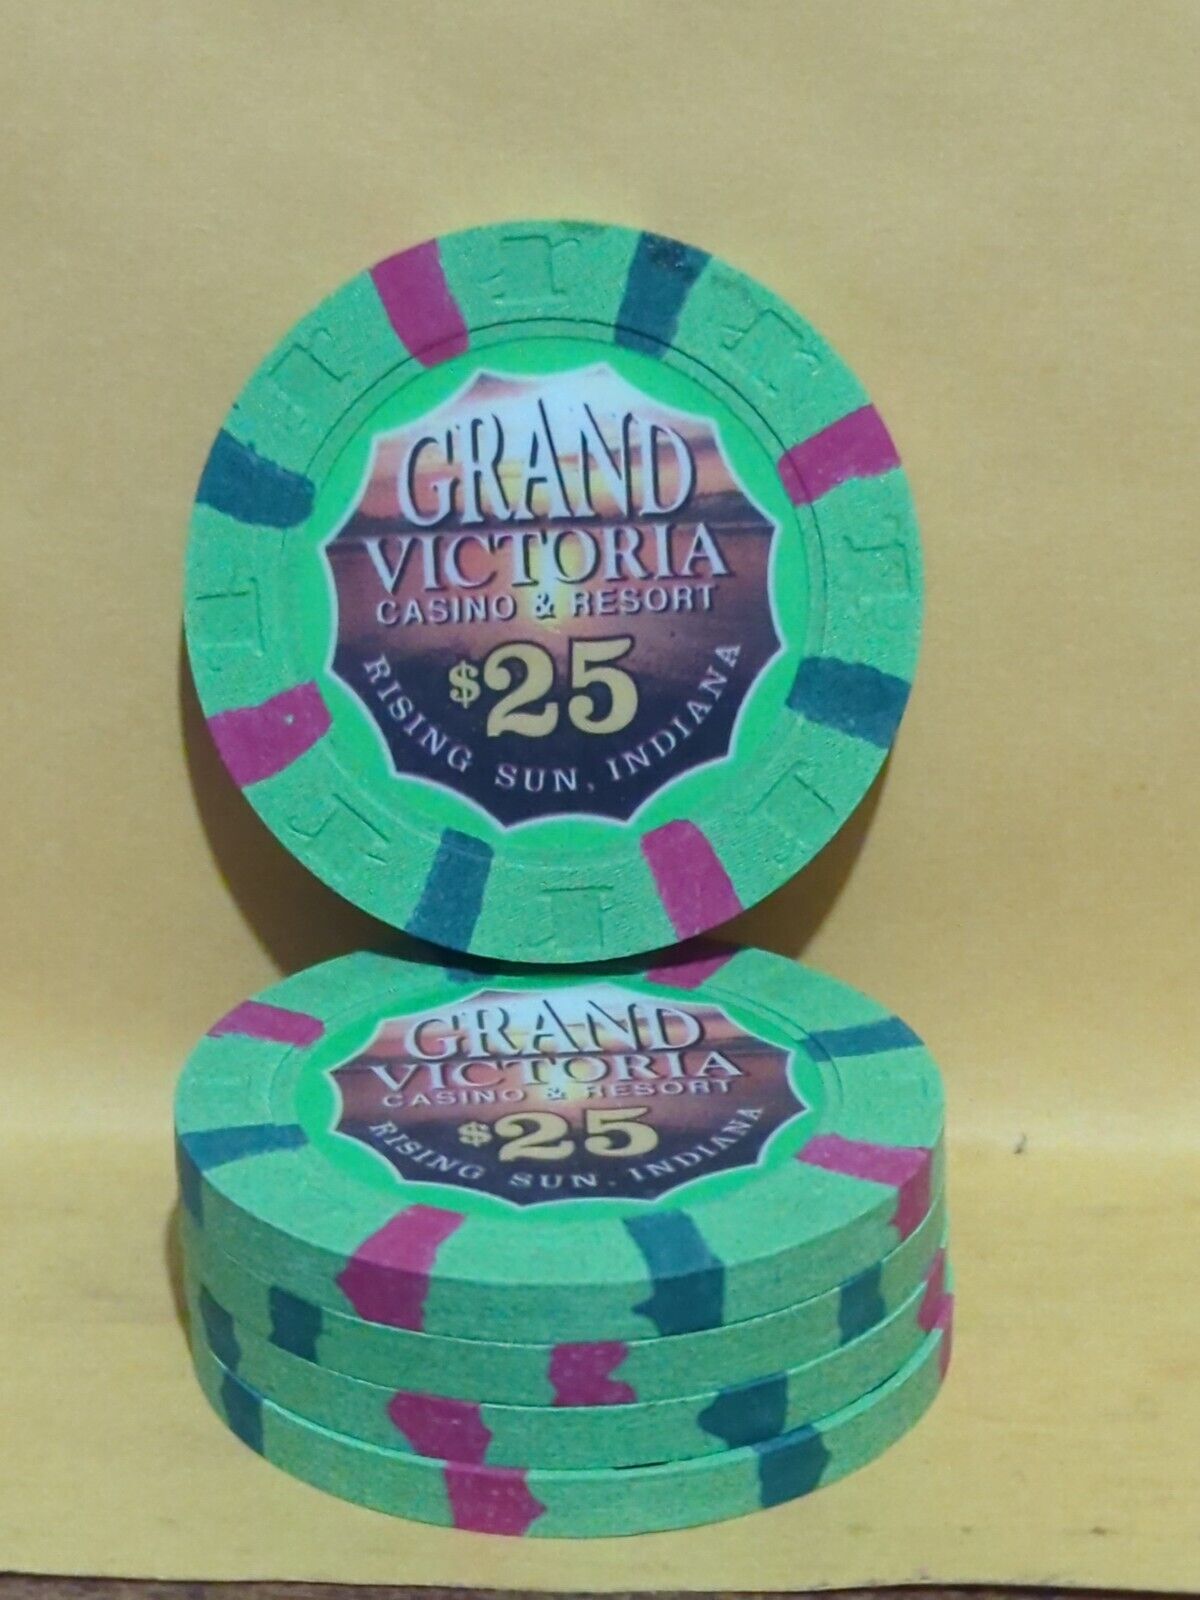 Grand Victoria Casino & Resort Rising Sun Indiana $25 poker chip